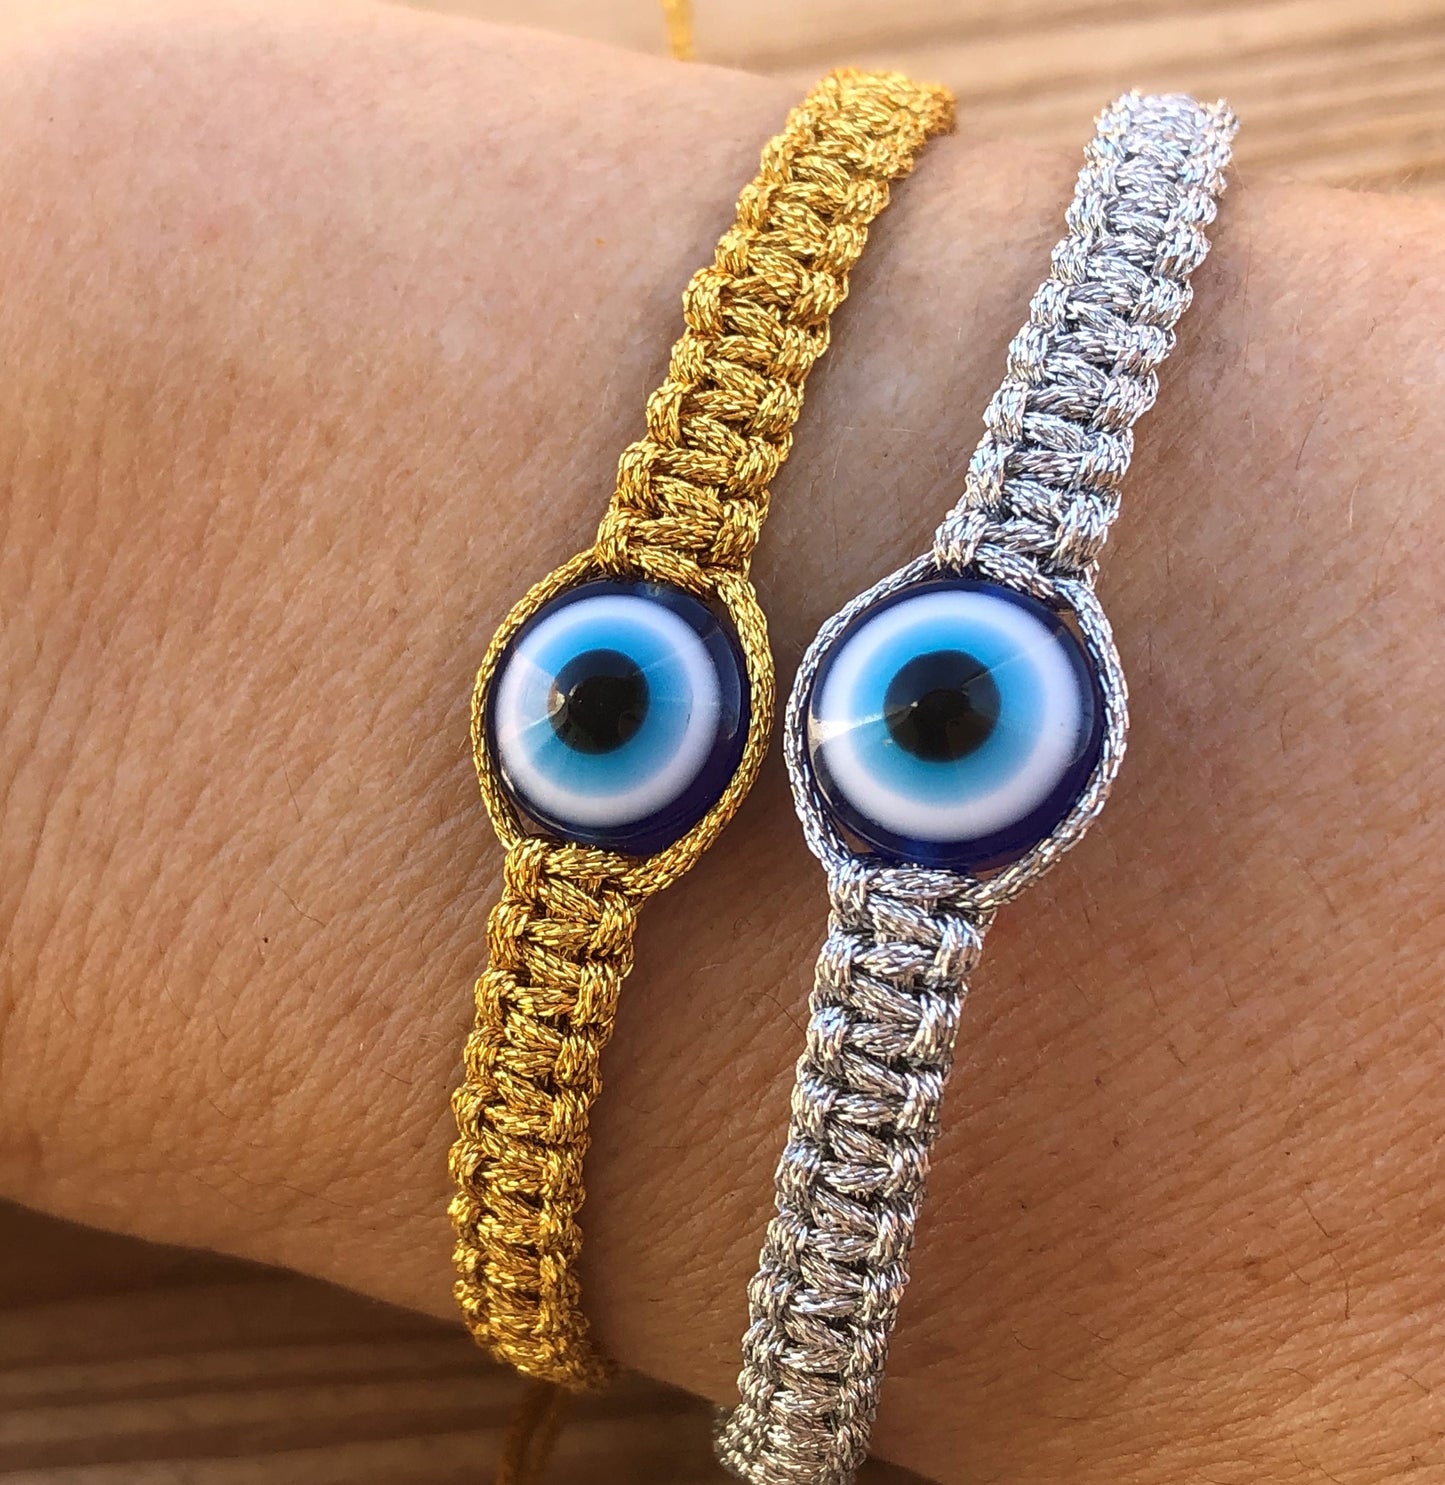 Woven evil eye bracelet - Gift for her - Greek jewelry